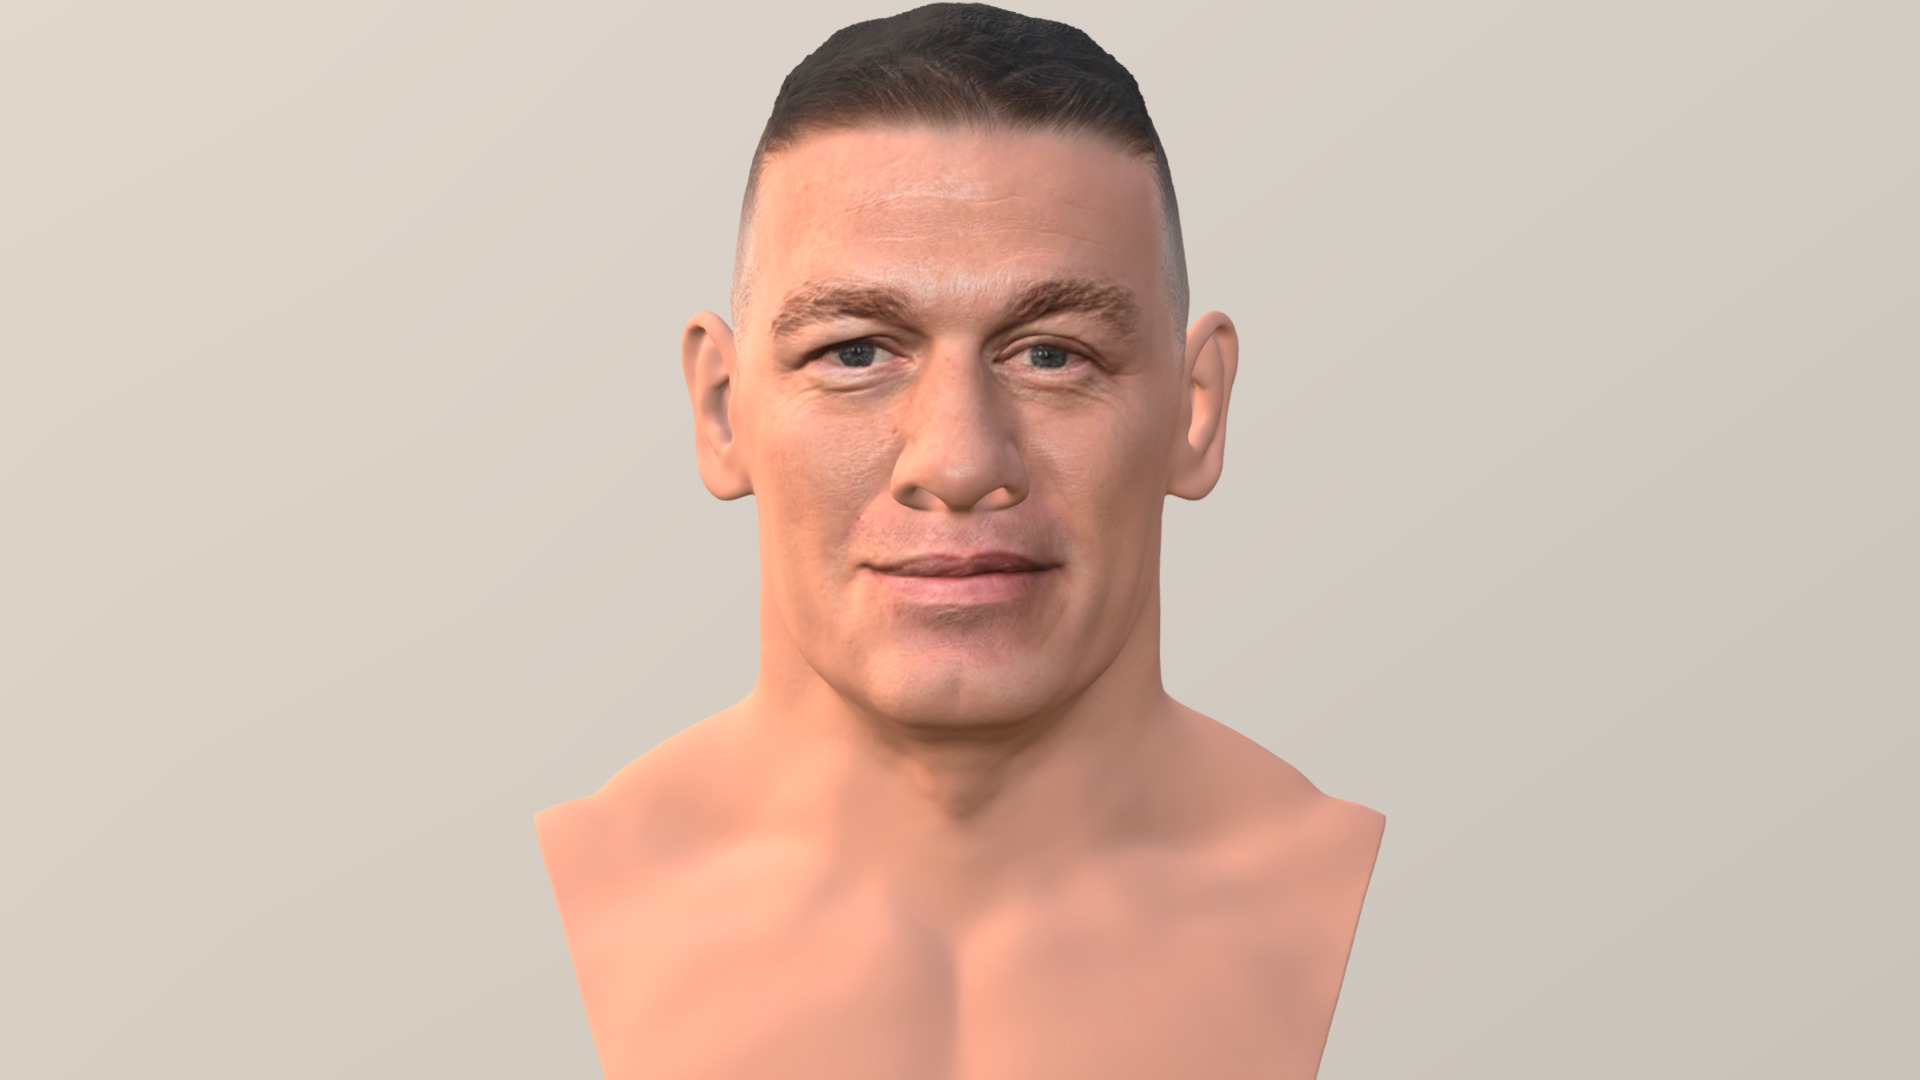 3D model John Cena bust for full color 3D printing - This is a 3D model of the John Cena bust for full color 3D printing. The 3D model is about a man with no shirt.